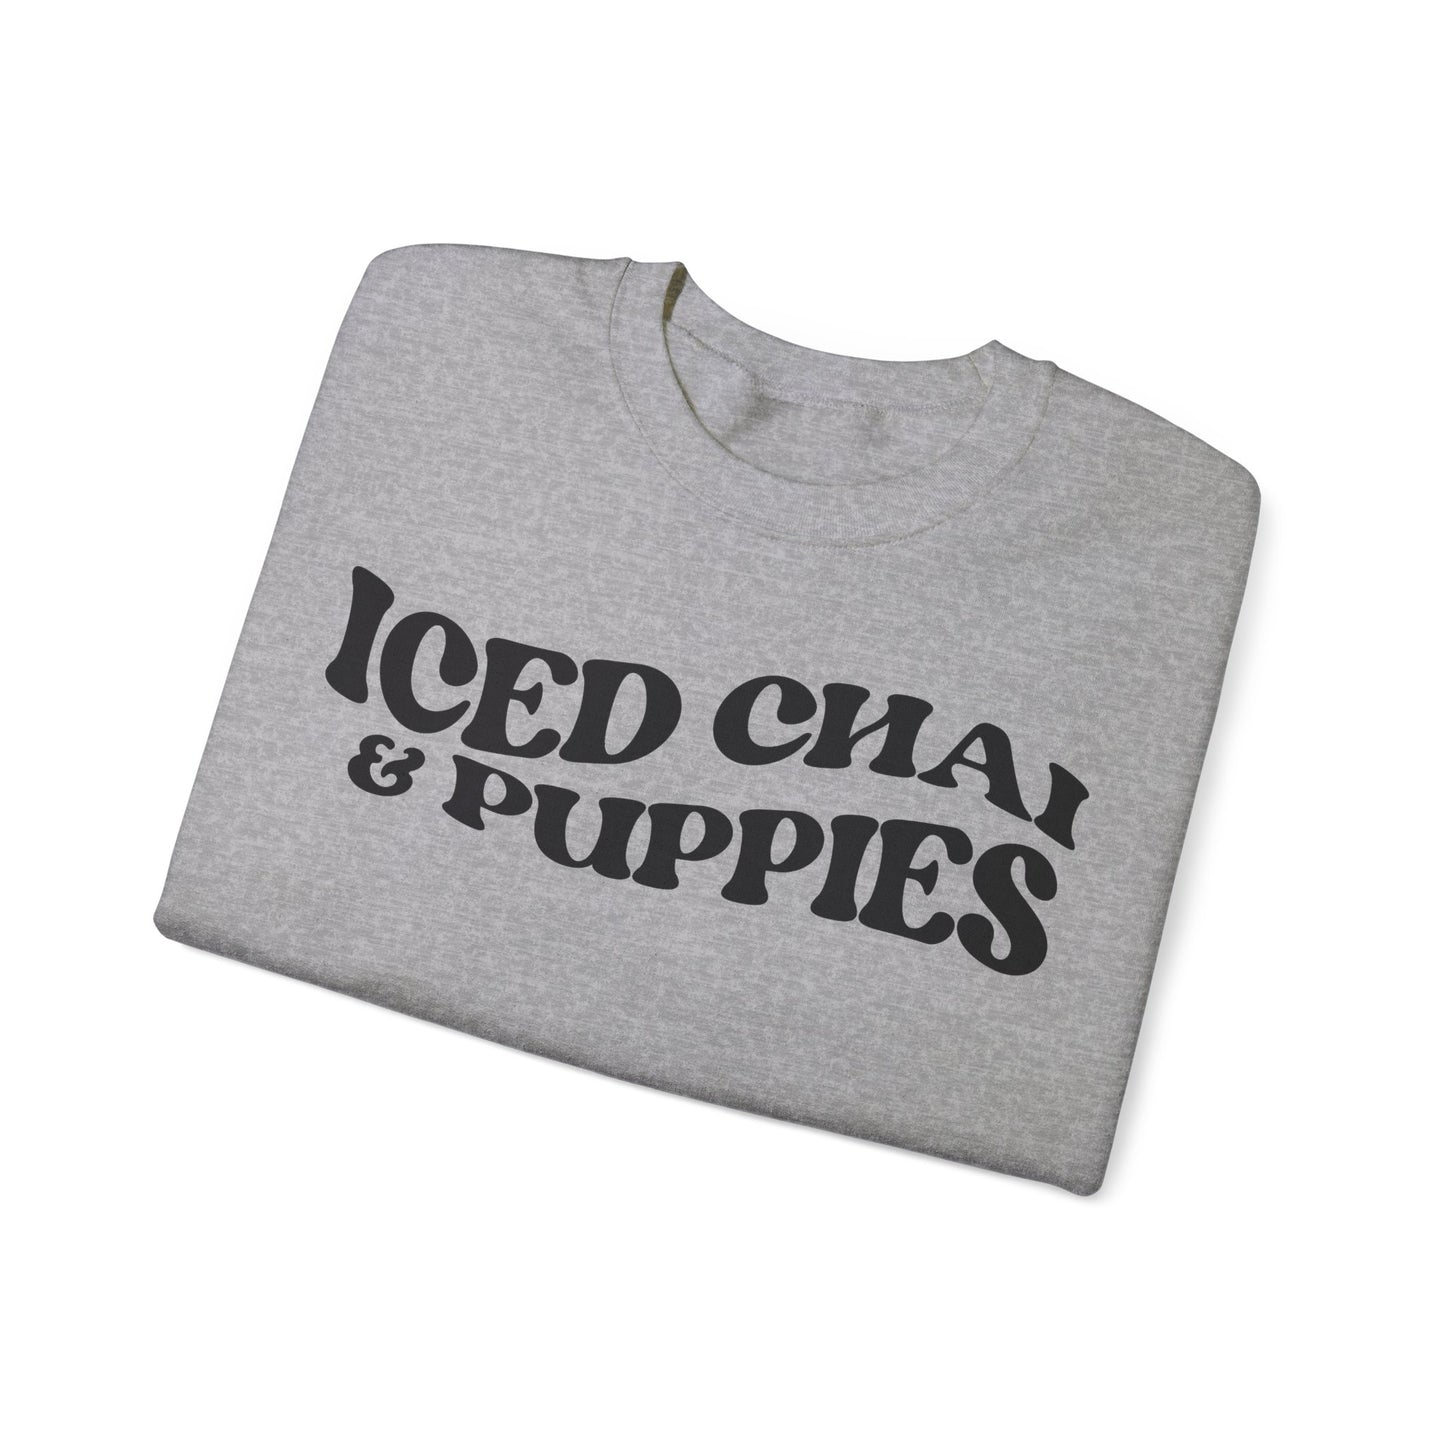 Iced Chai and Puppies Crewneck Sweatshirt